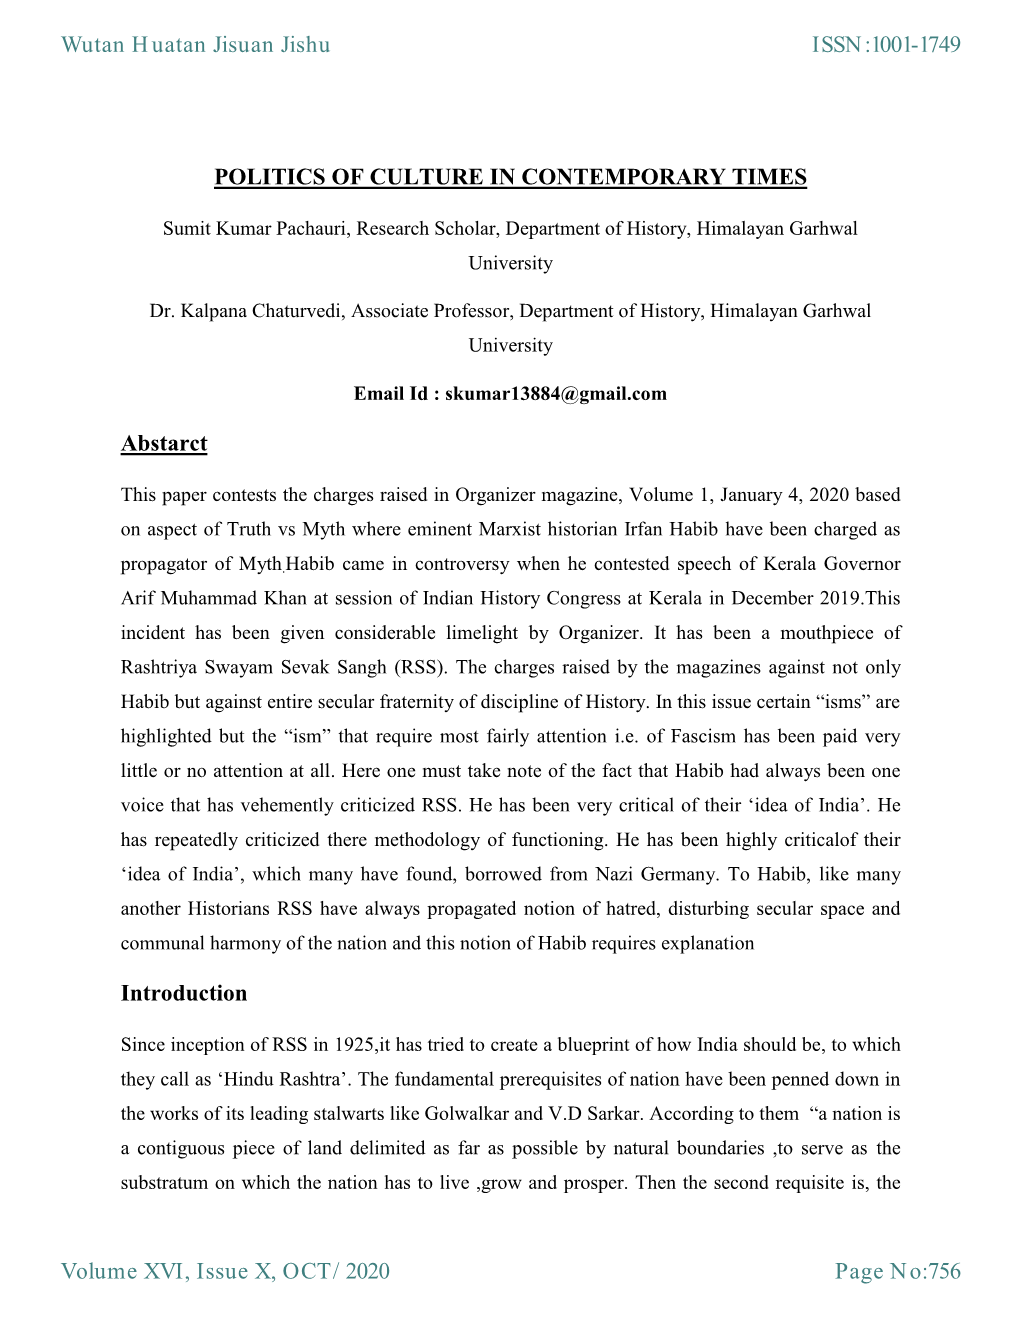 POLITICS of CULTURE in CONTEMPORARY TIMES Abstarct Introduction Wutan Huatan Jisuan Jishu Volume XVI, Issue X, OCT/2020 ISSN:100